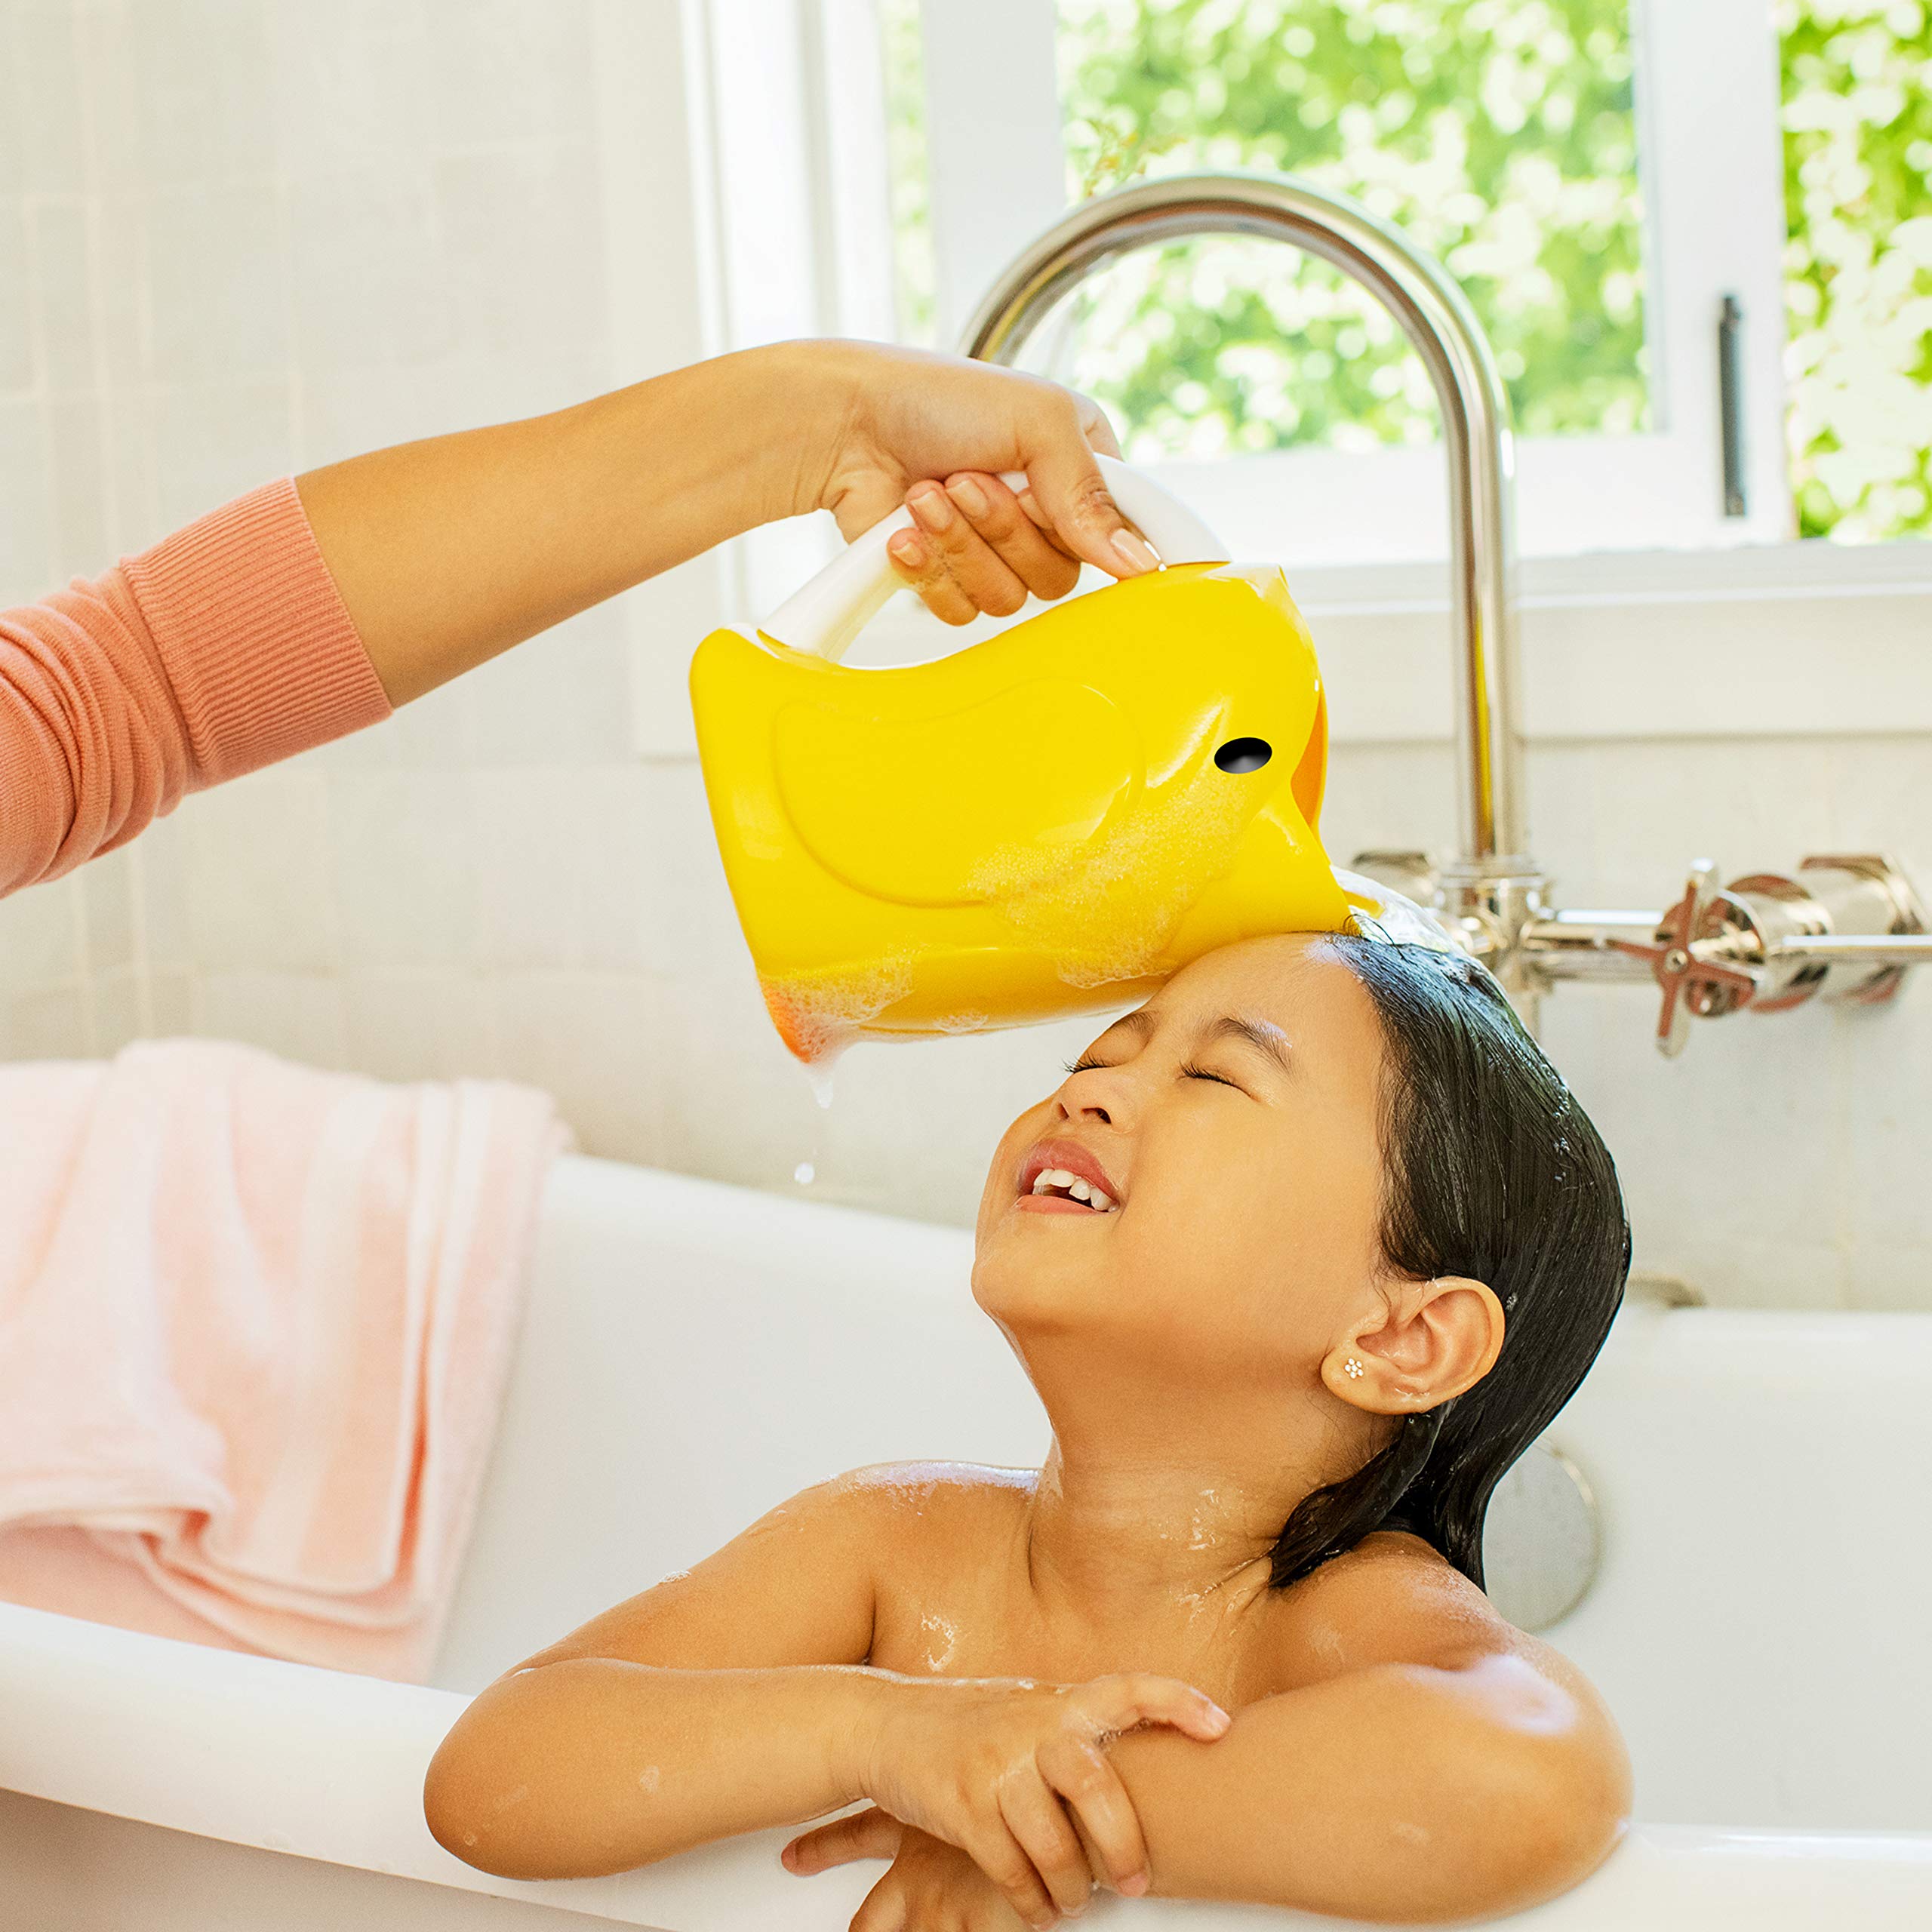 Munchkin® Duckling™ Shampoo Bath Rinser, Yellow